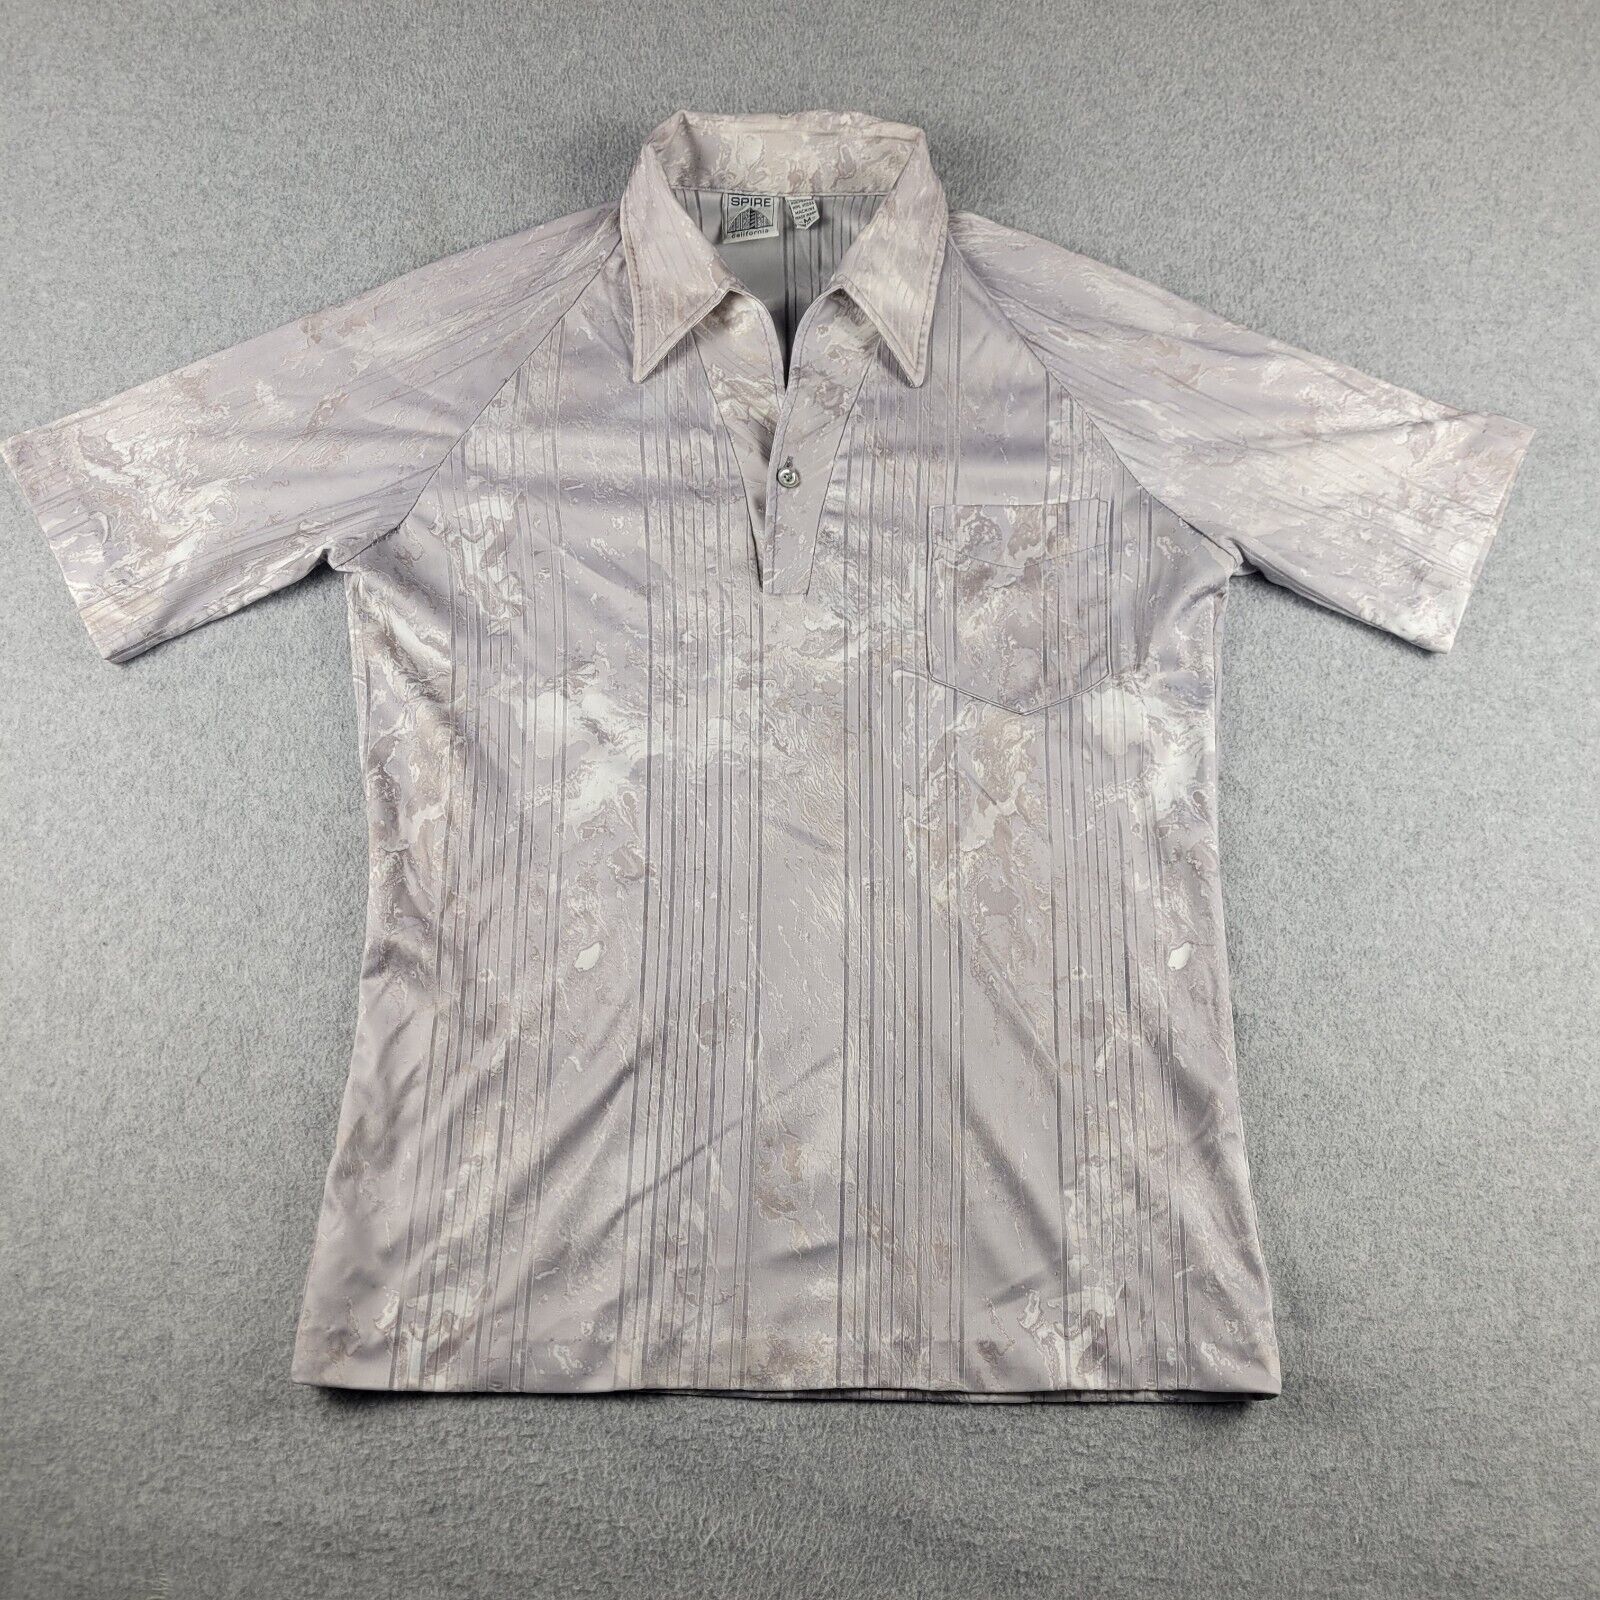 Vintage Spire California Polo Shirt Medium Gray Patterned Short Sleeve Made USA